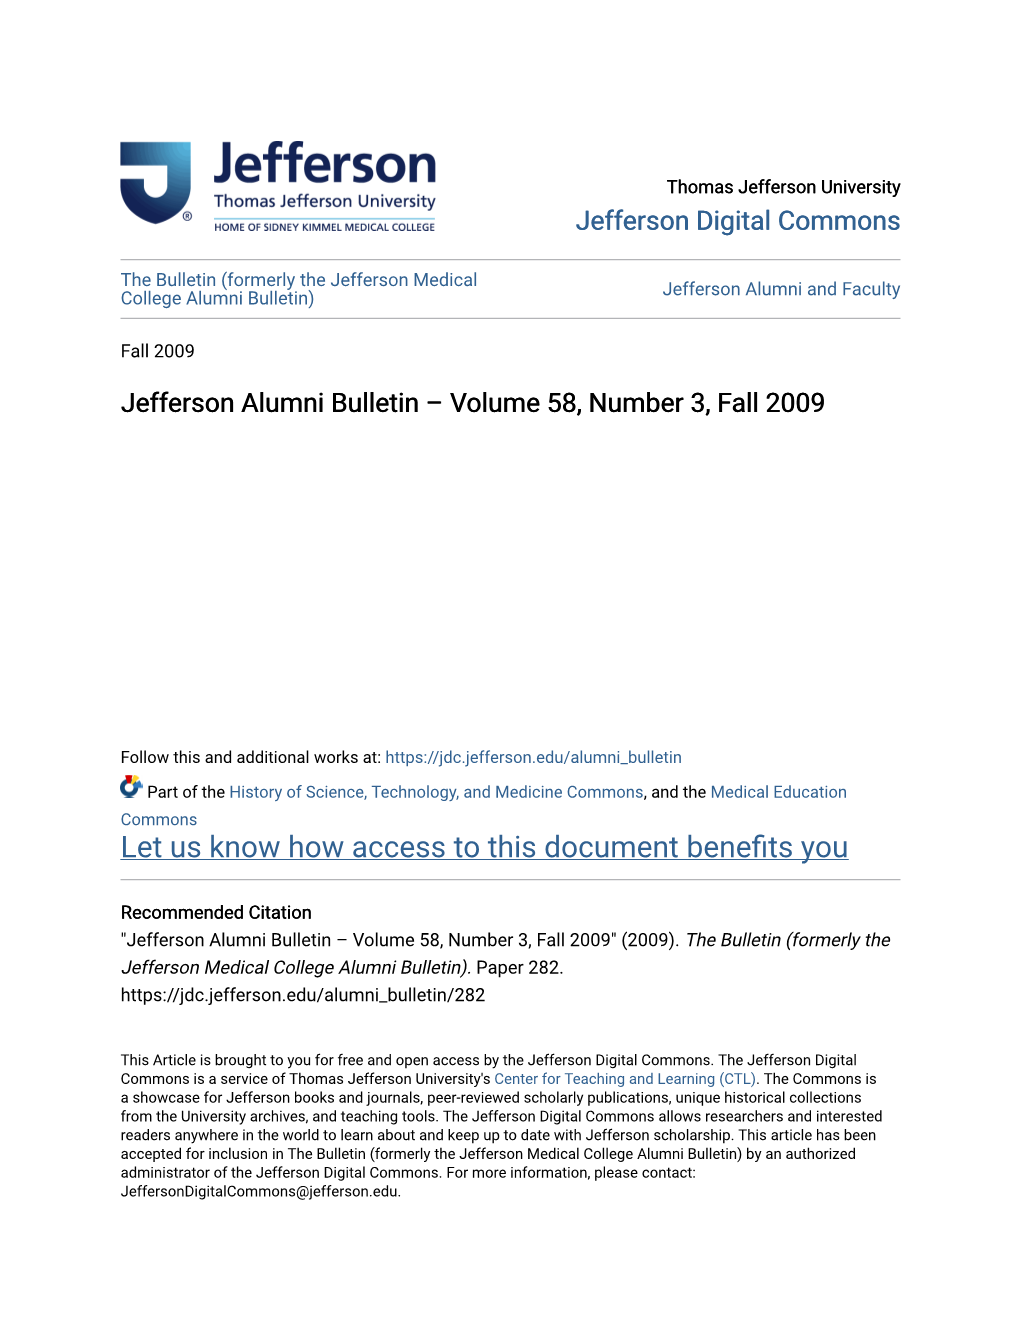 Jefferson Alumni Bulletin – Volume 58, Number 3, Fall 2009